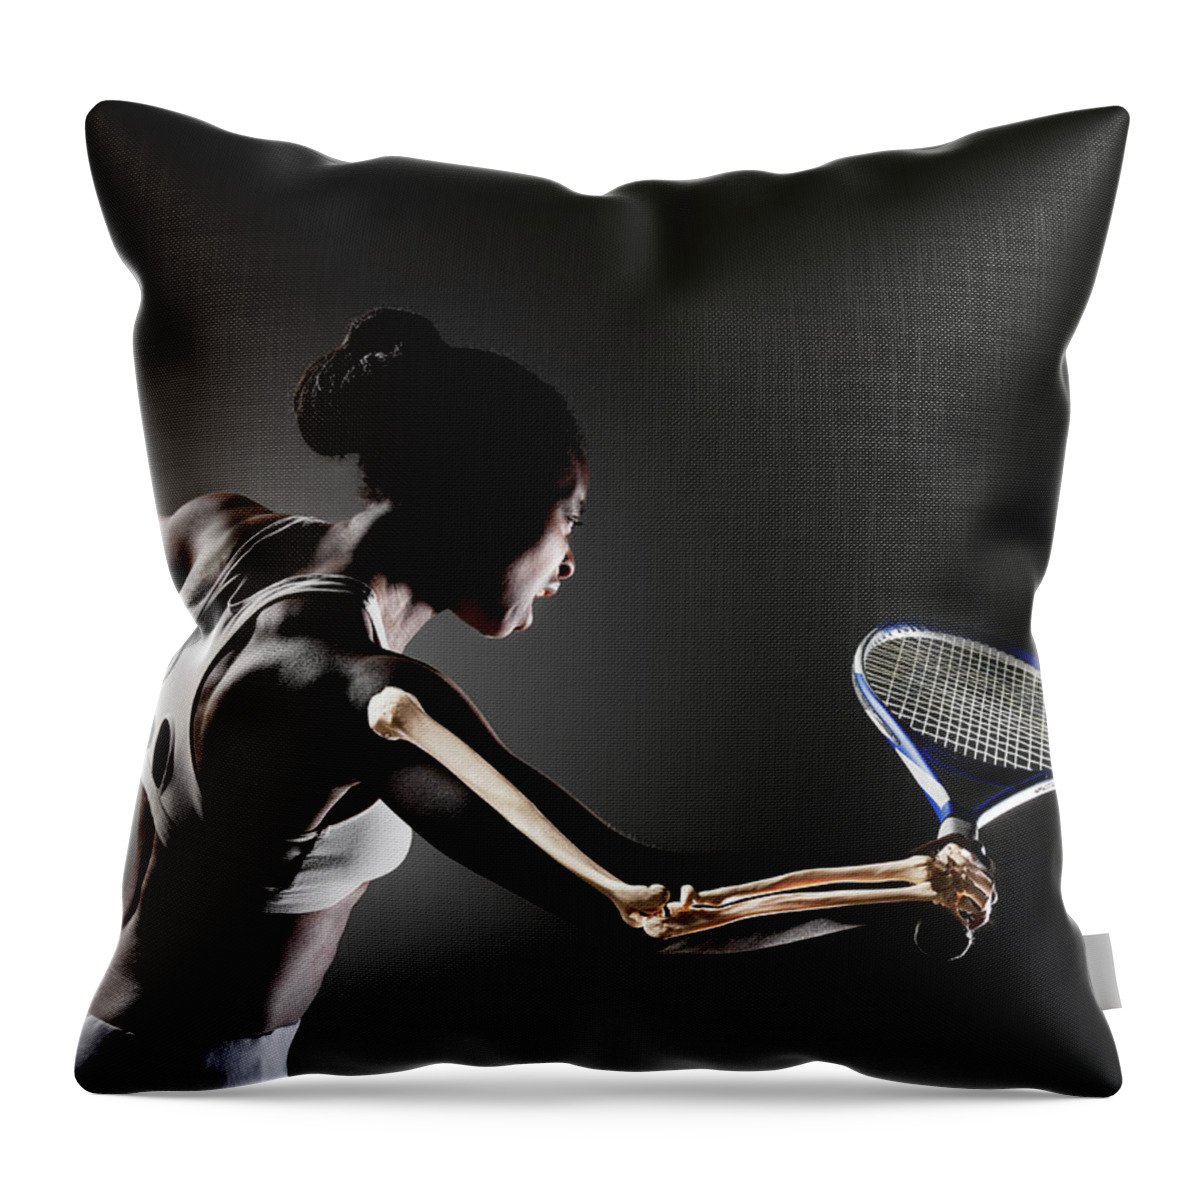 Tennis Throw Pillow featuring the photograph Female Tennis Player With Skeleton by Henrik Sorensen